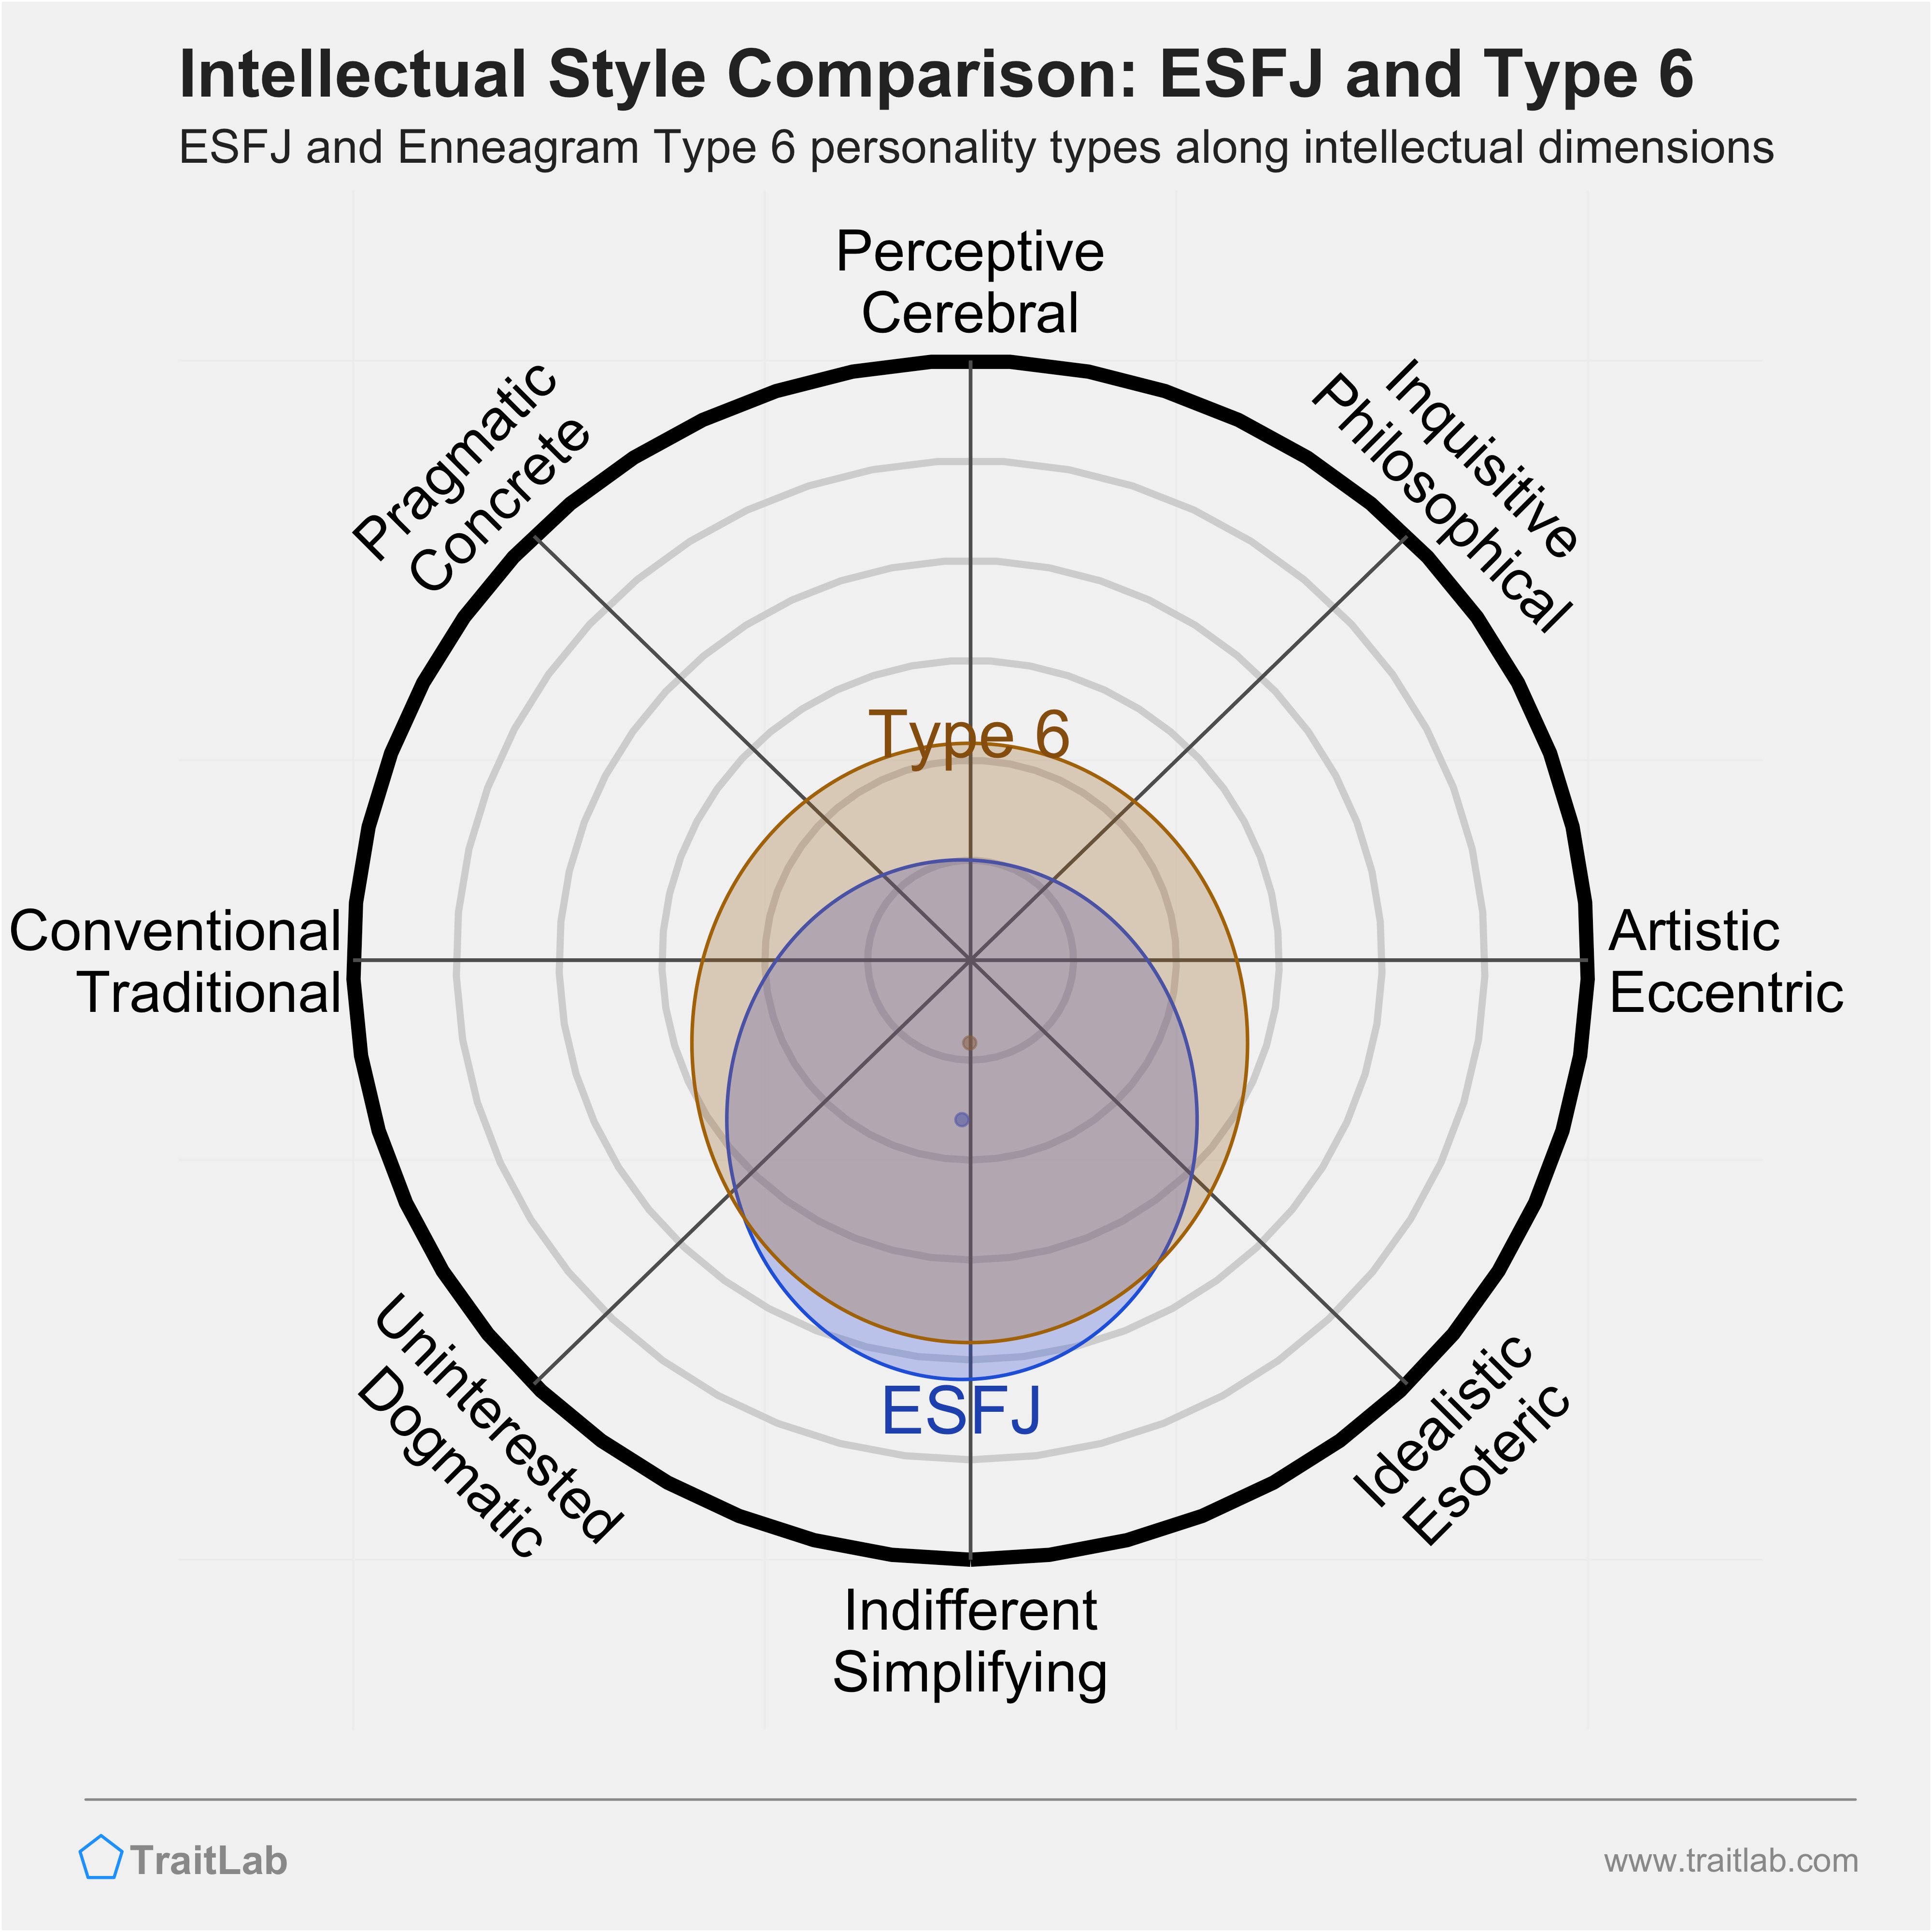 ESFJ and Type 6 comparison across intellectual dimensions